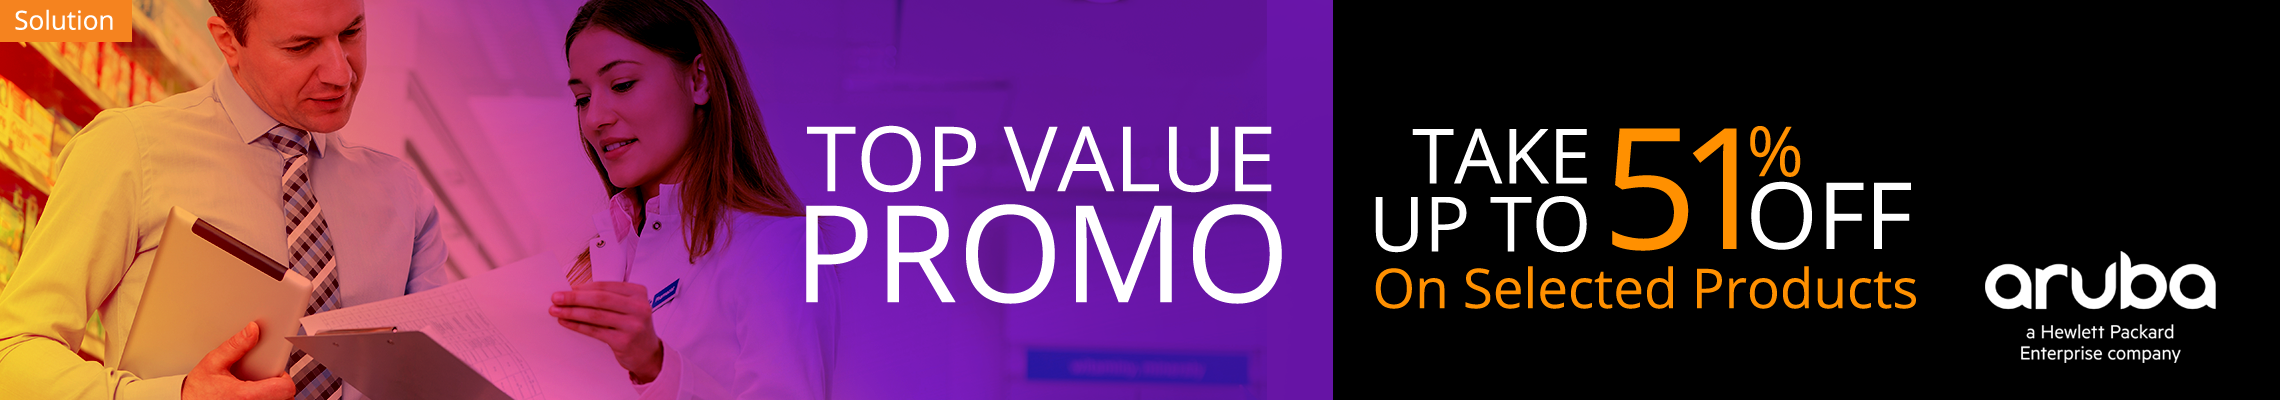 Top Value Promo